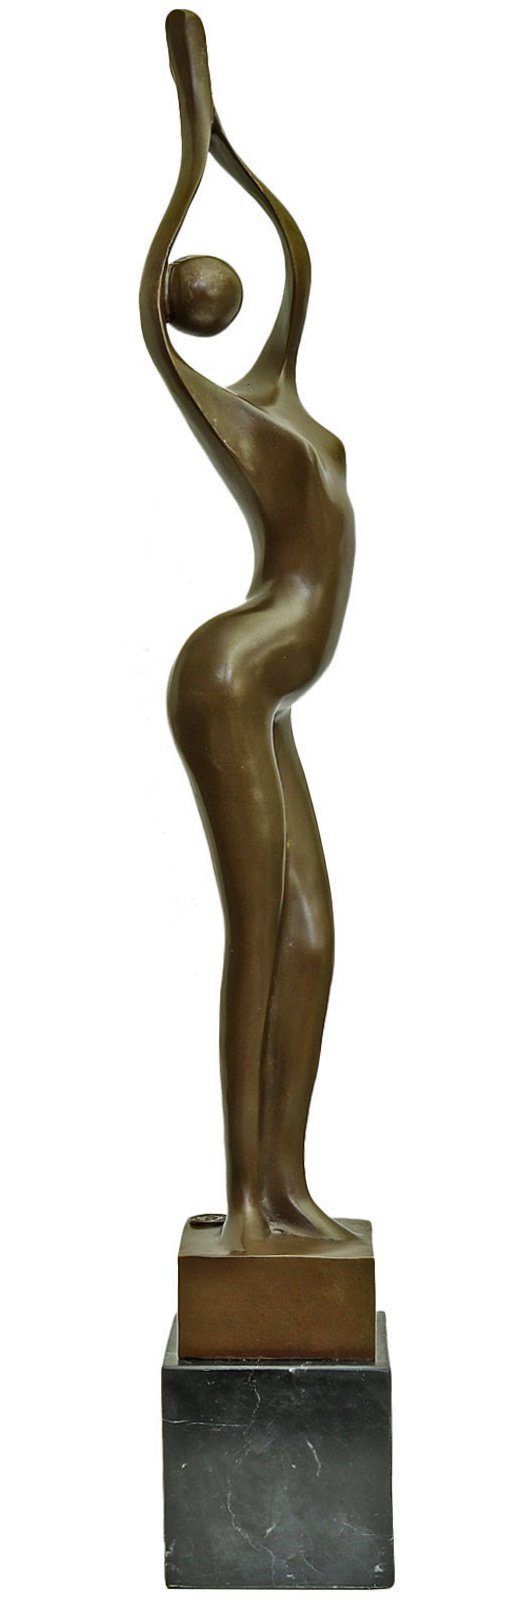 Aubaho Skulptur Bronzeskulptur Erotik erotische Kunst im Antik-Stil Bronze Figur Statu